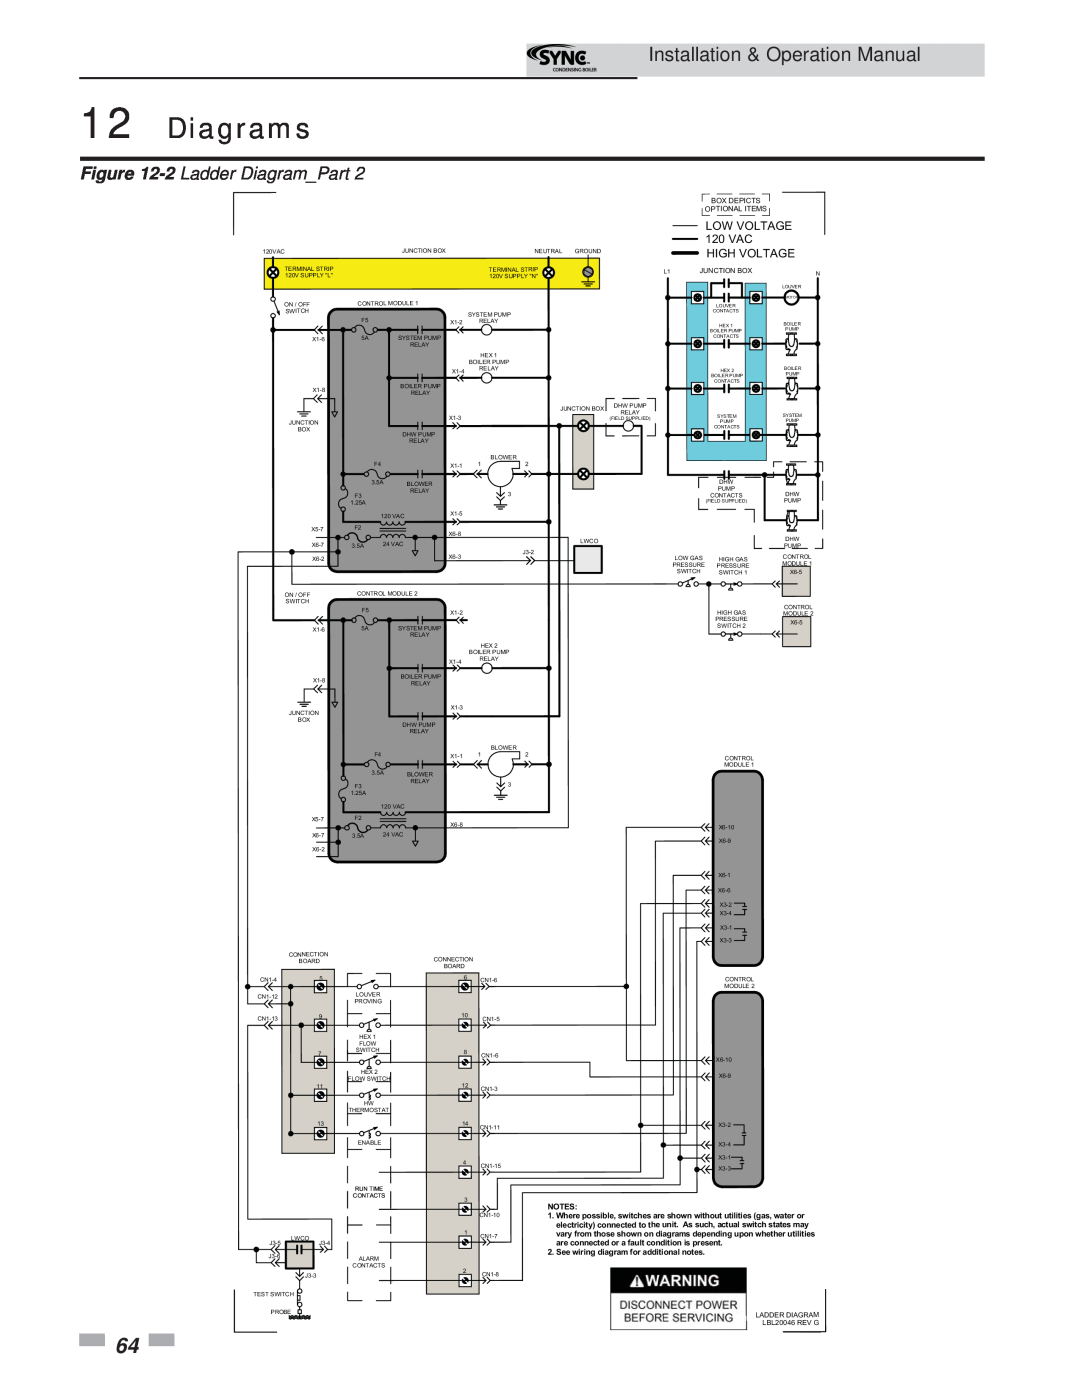 Lochinvar 5 2 Ladder Diagram_Part, Diagrams, Installation & Operation Manual, Low Voltage, 120 VAC, High Voltage, Notes 